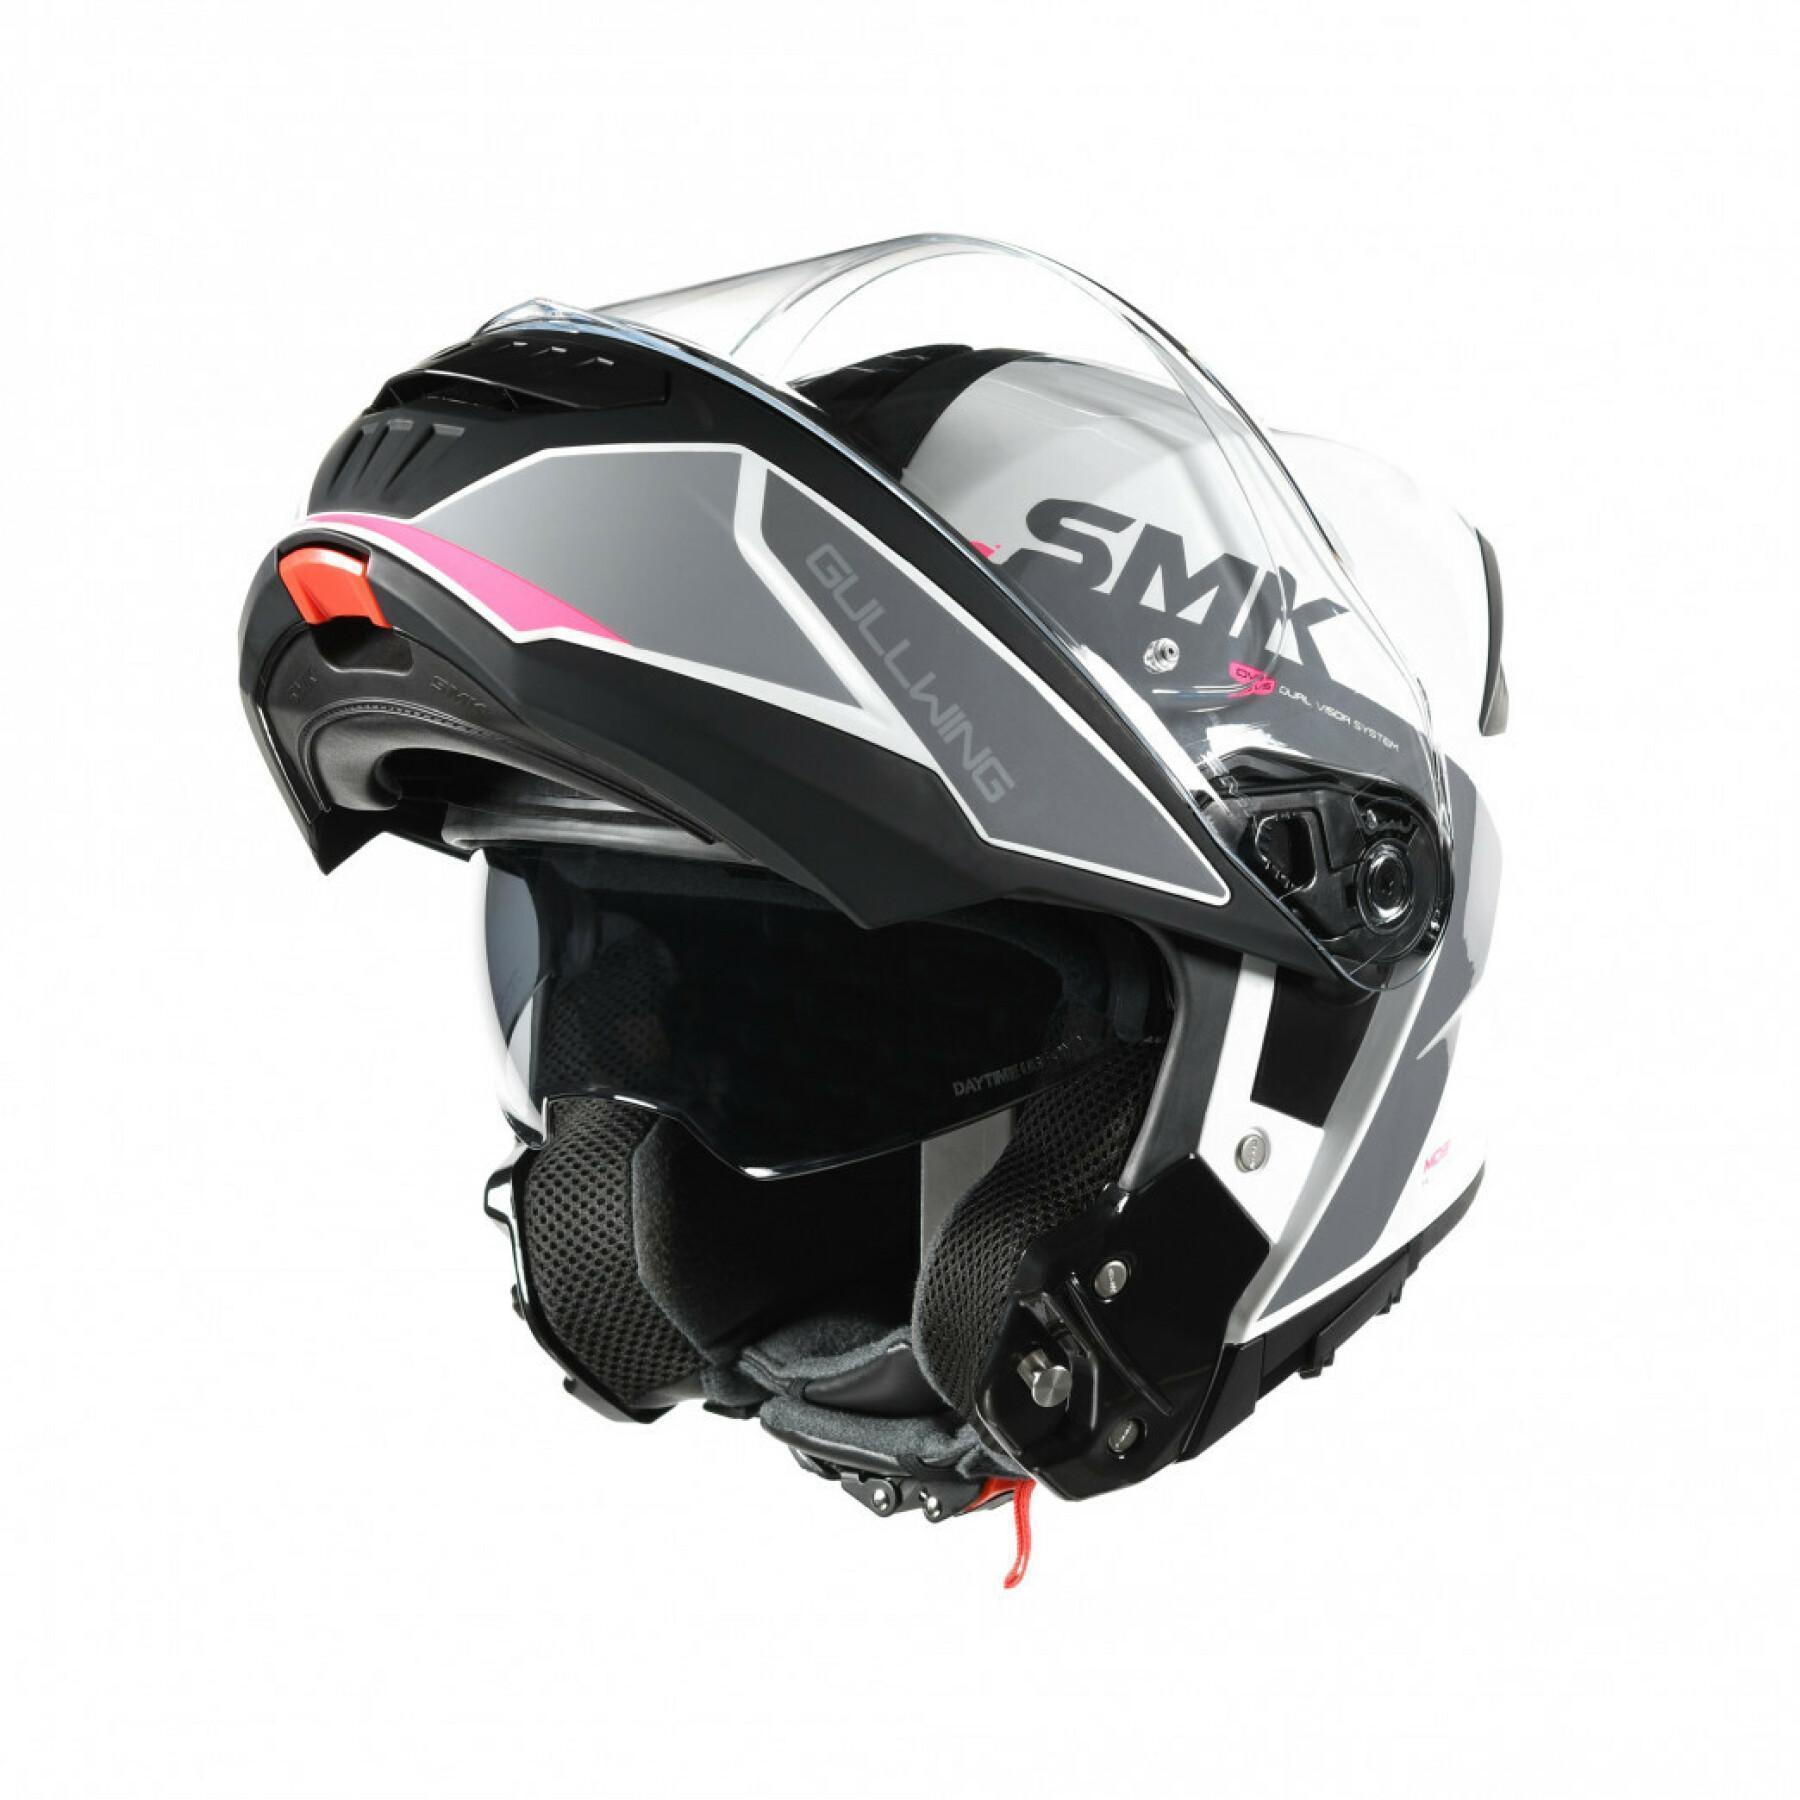 Modular motorcycle helmet SMK Gullwing Kresto